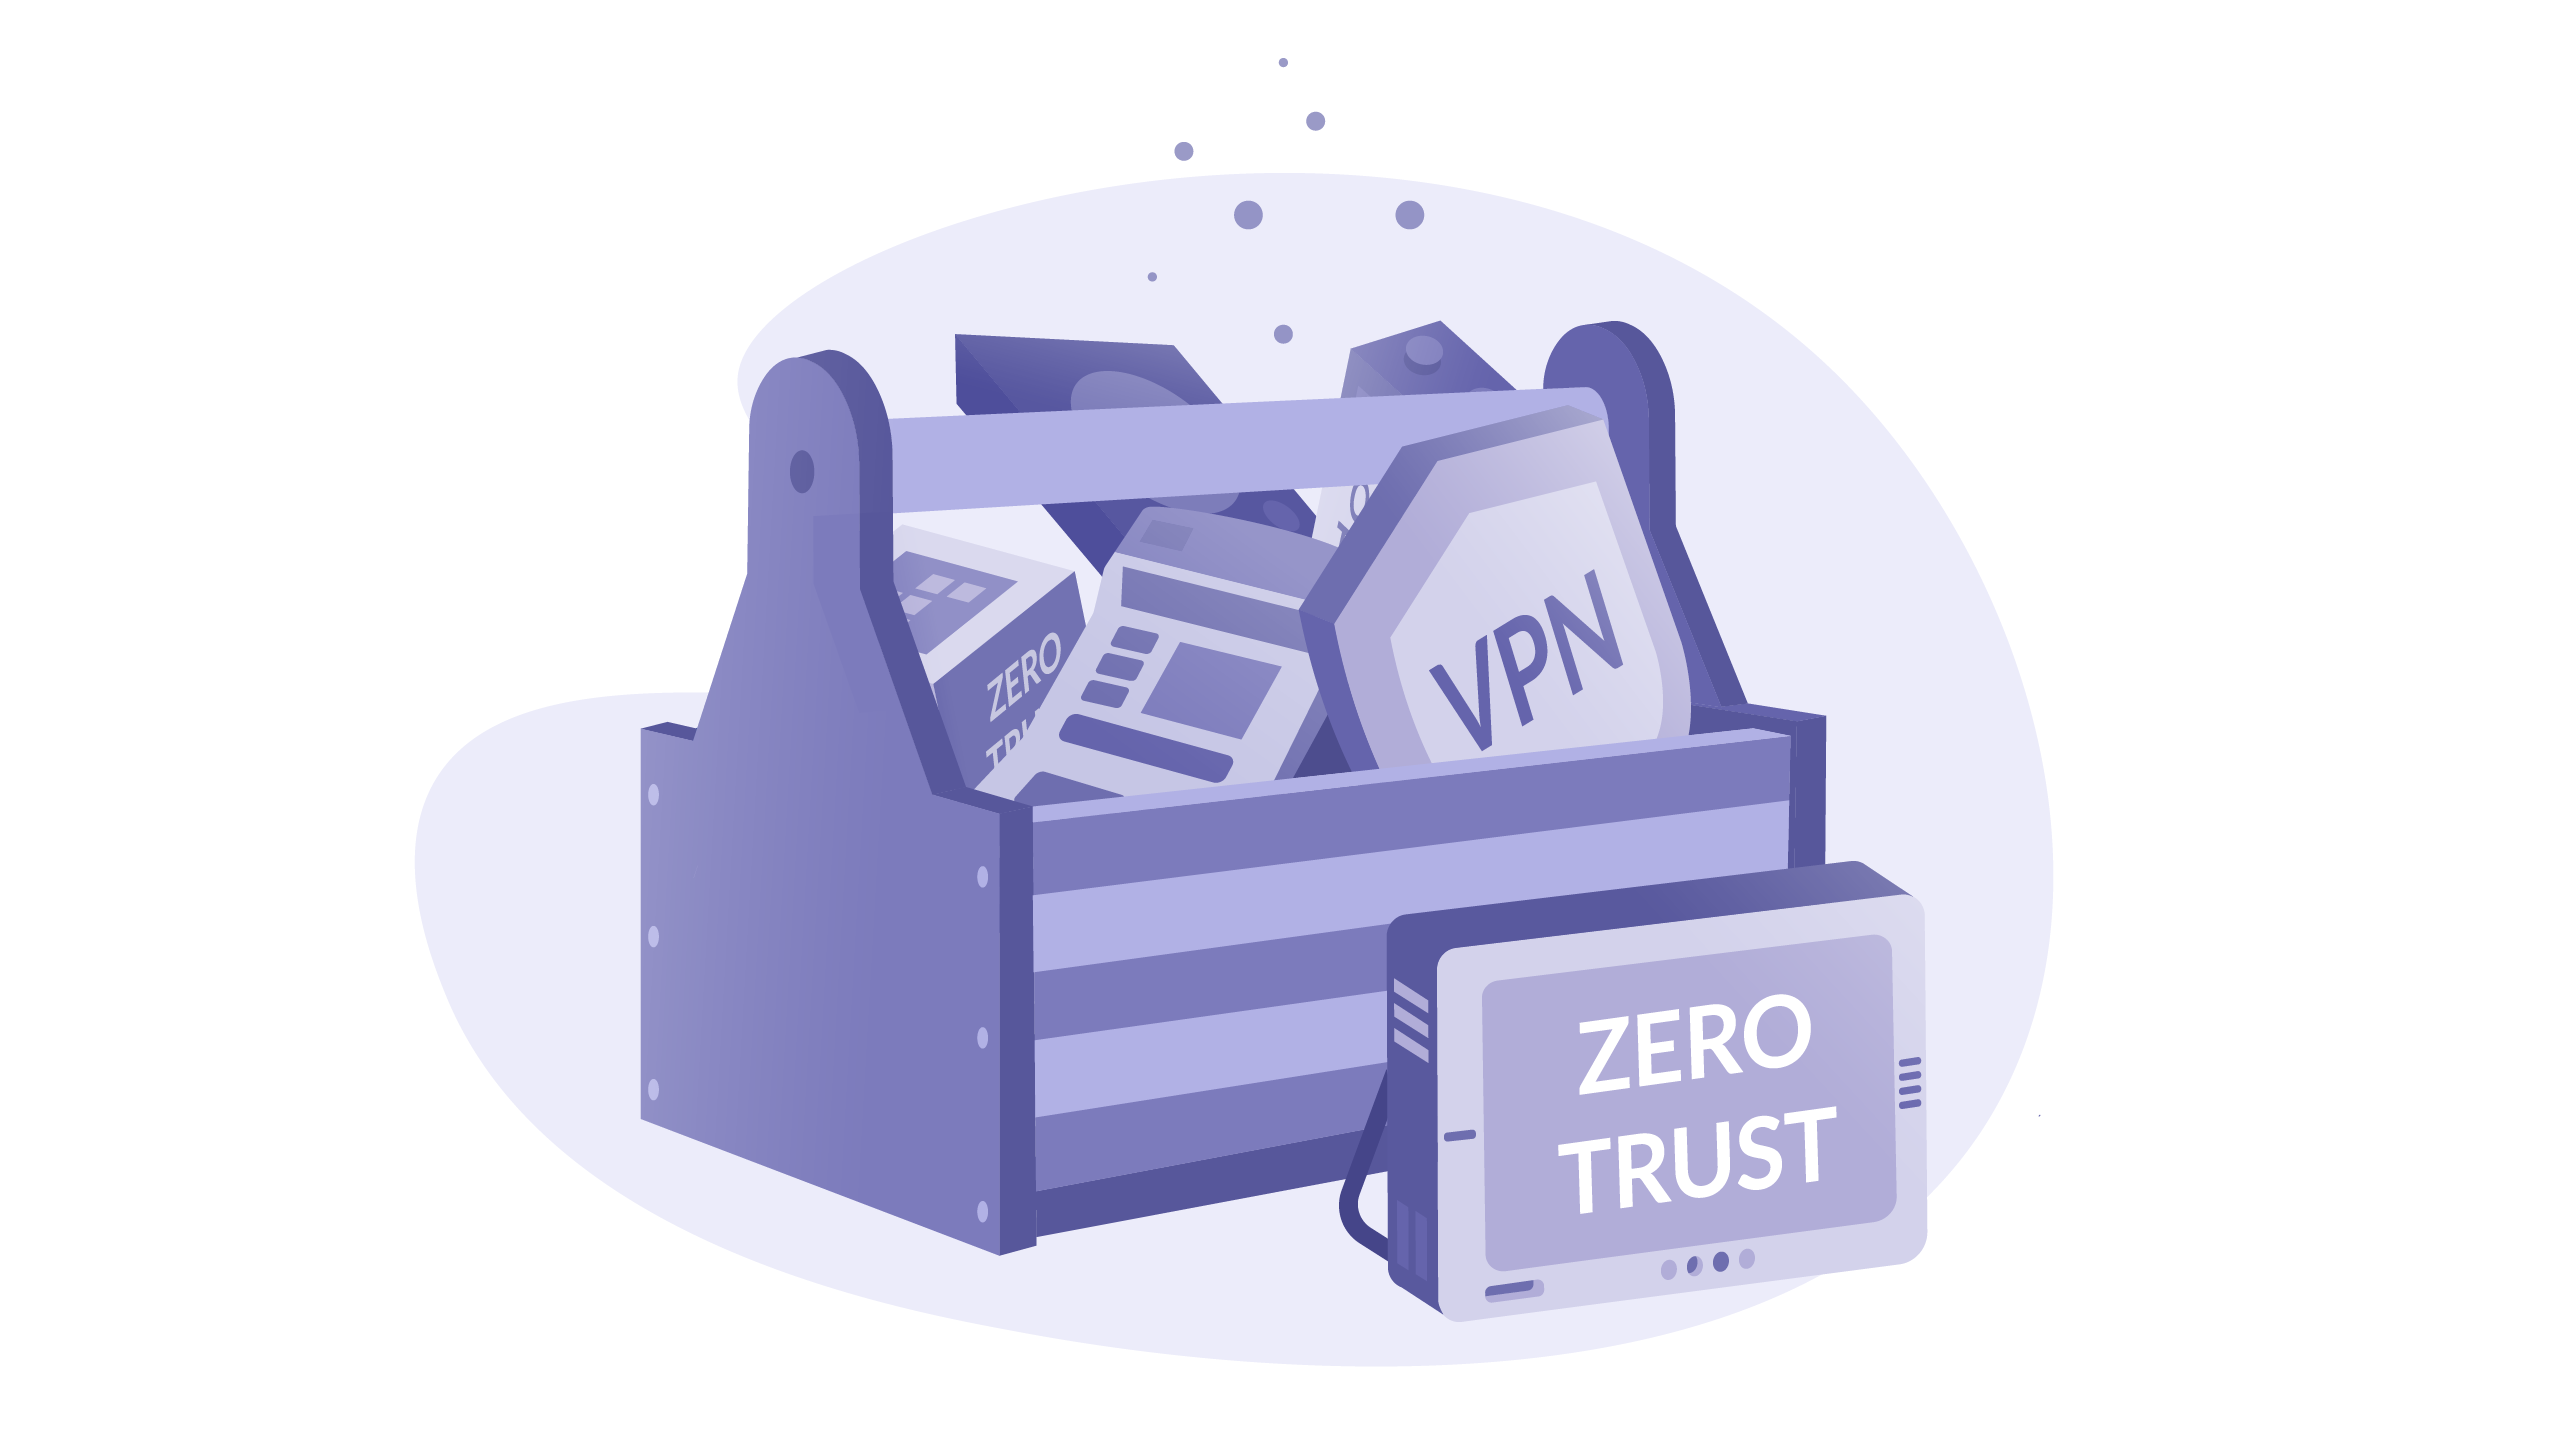 VPNs and Zero Trust